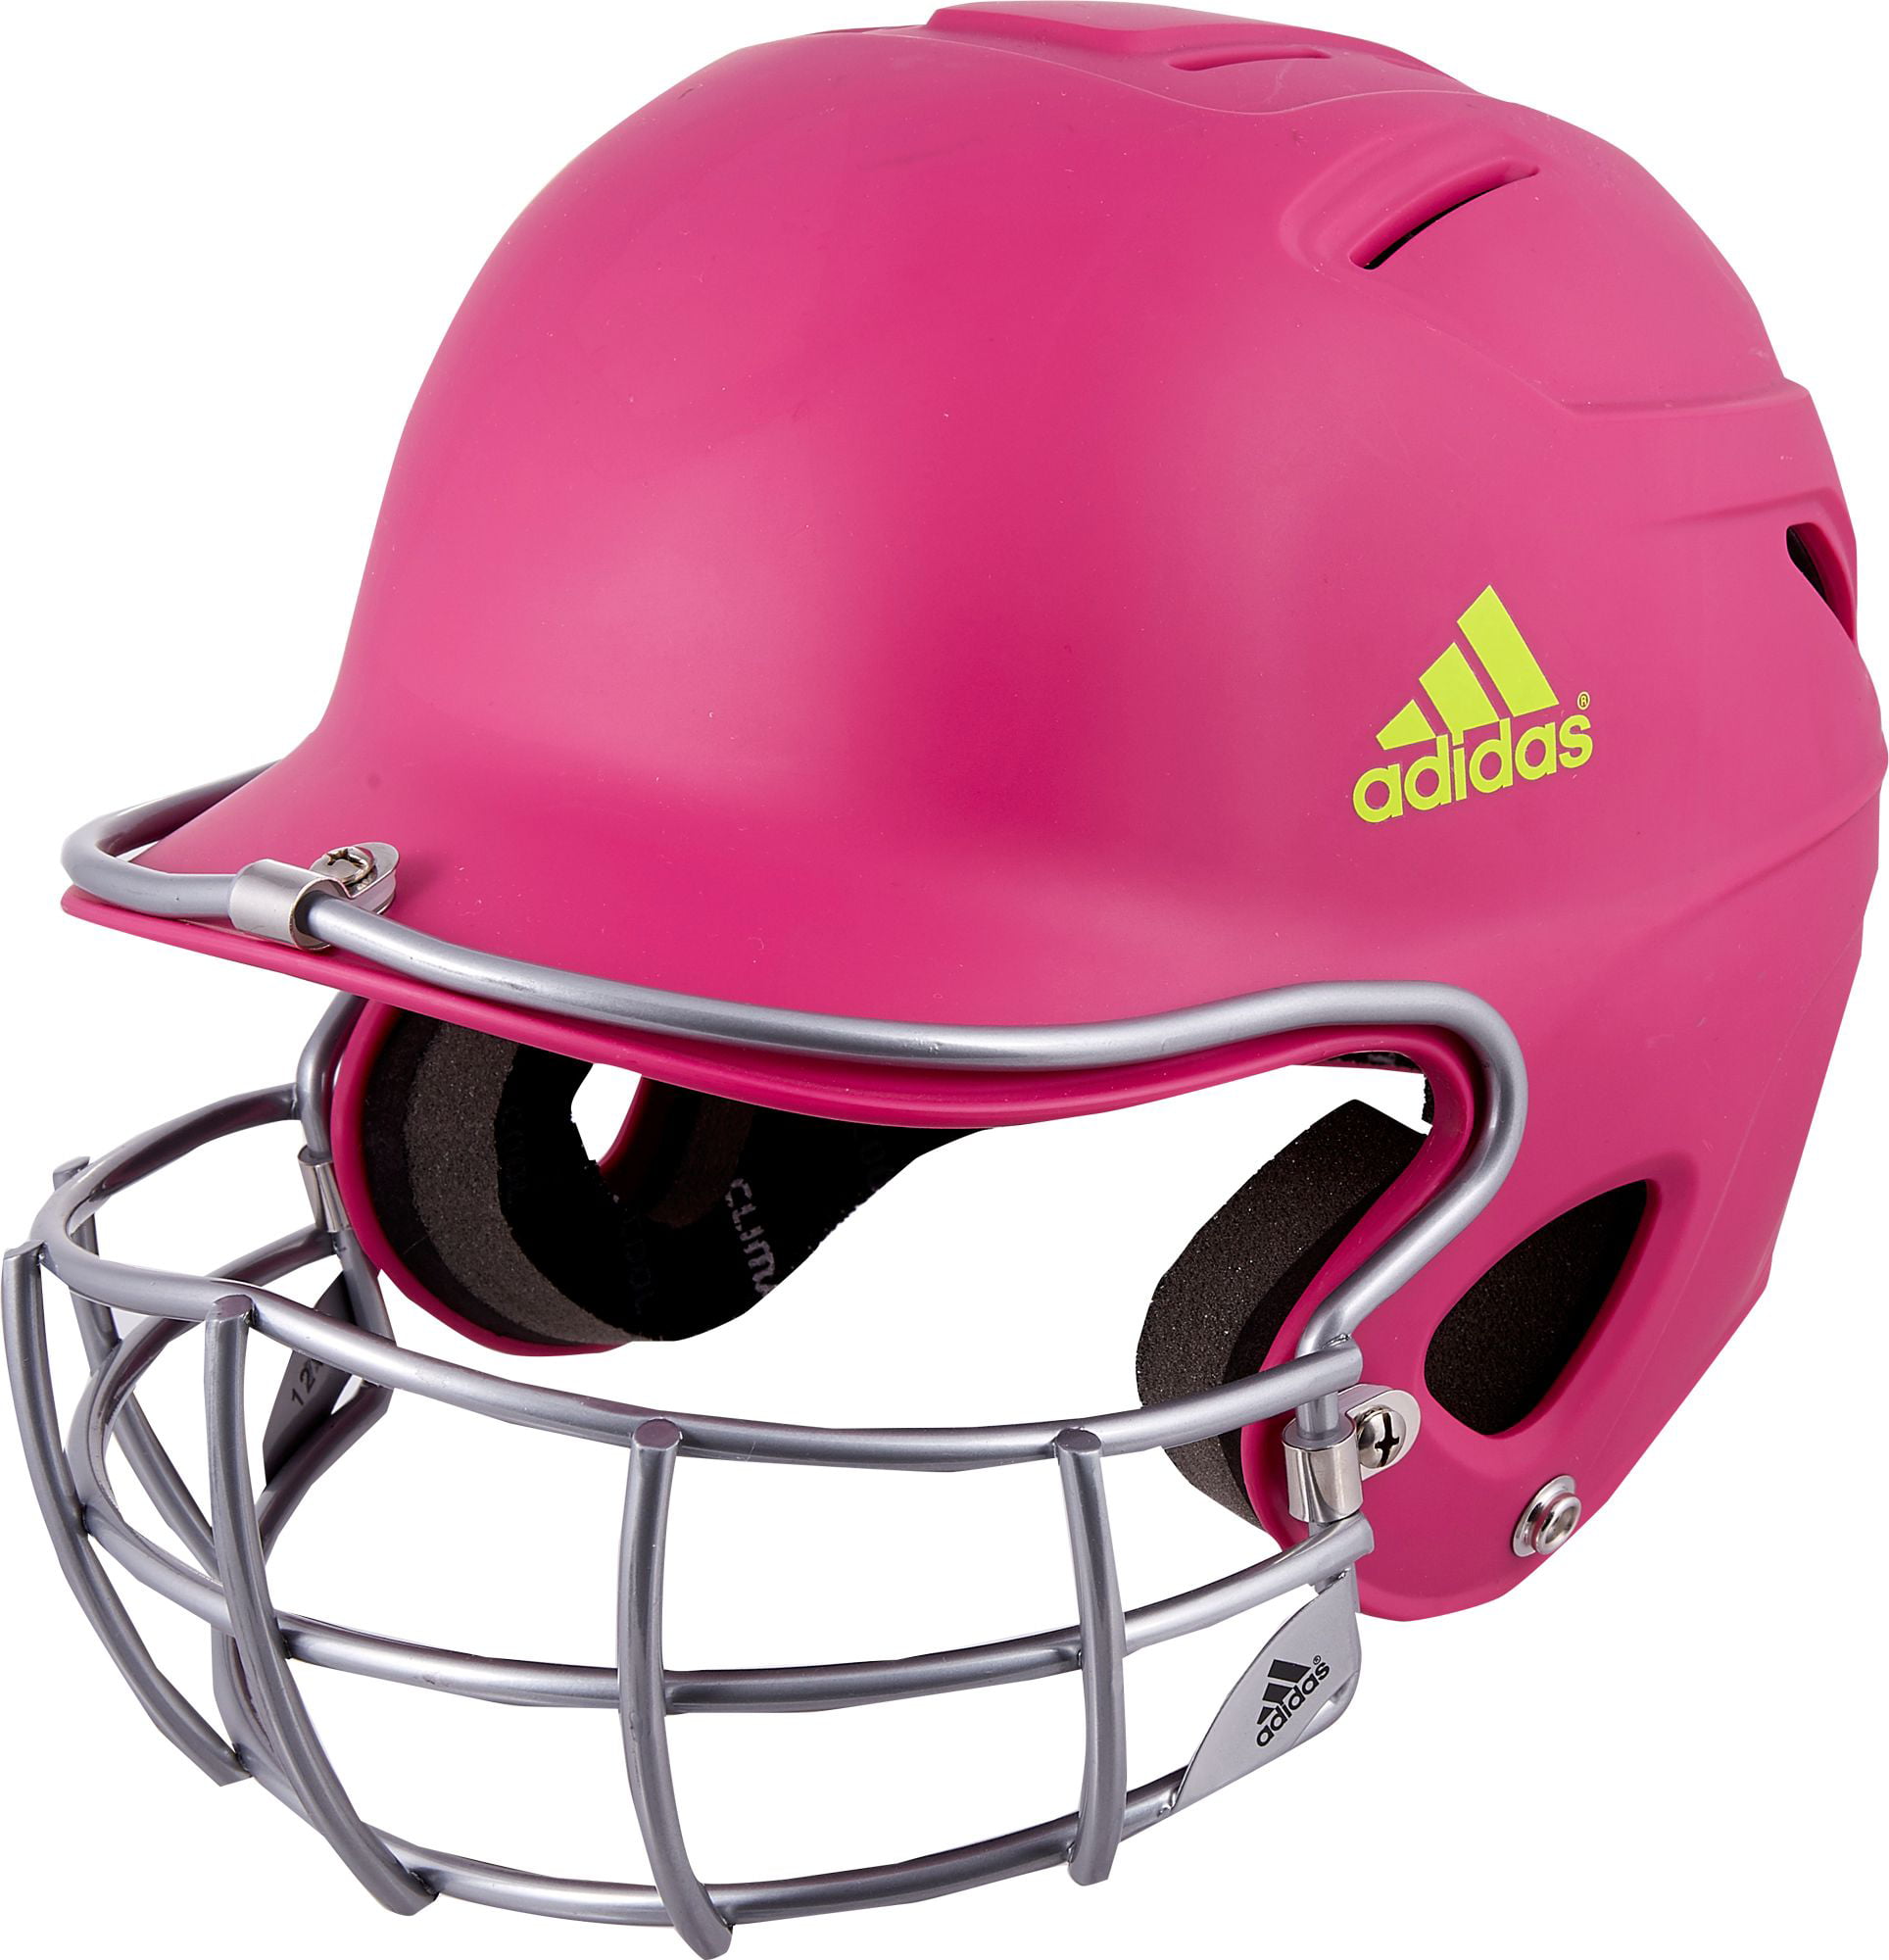 adidas helmet face guard